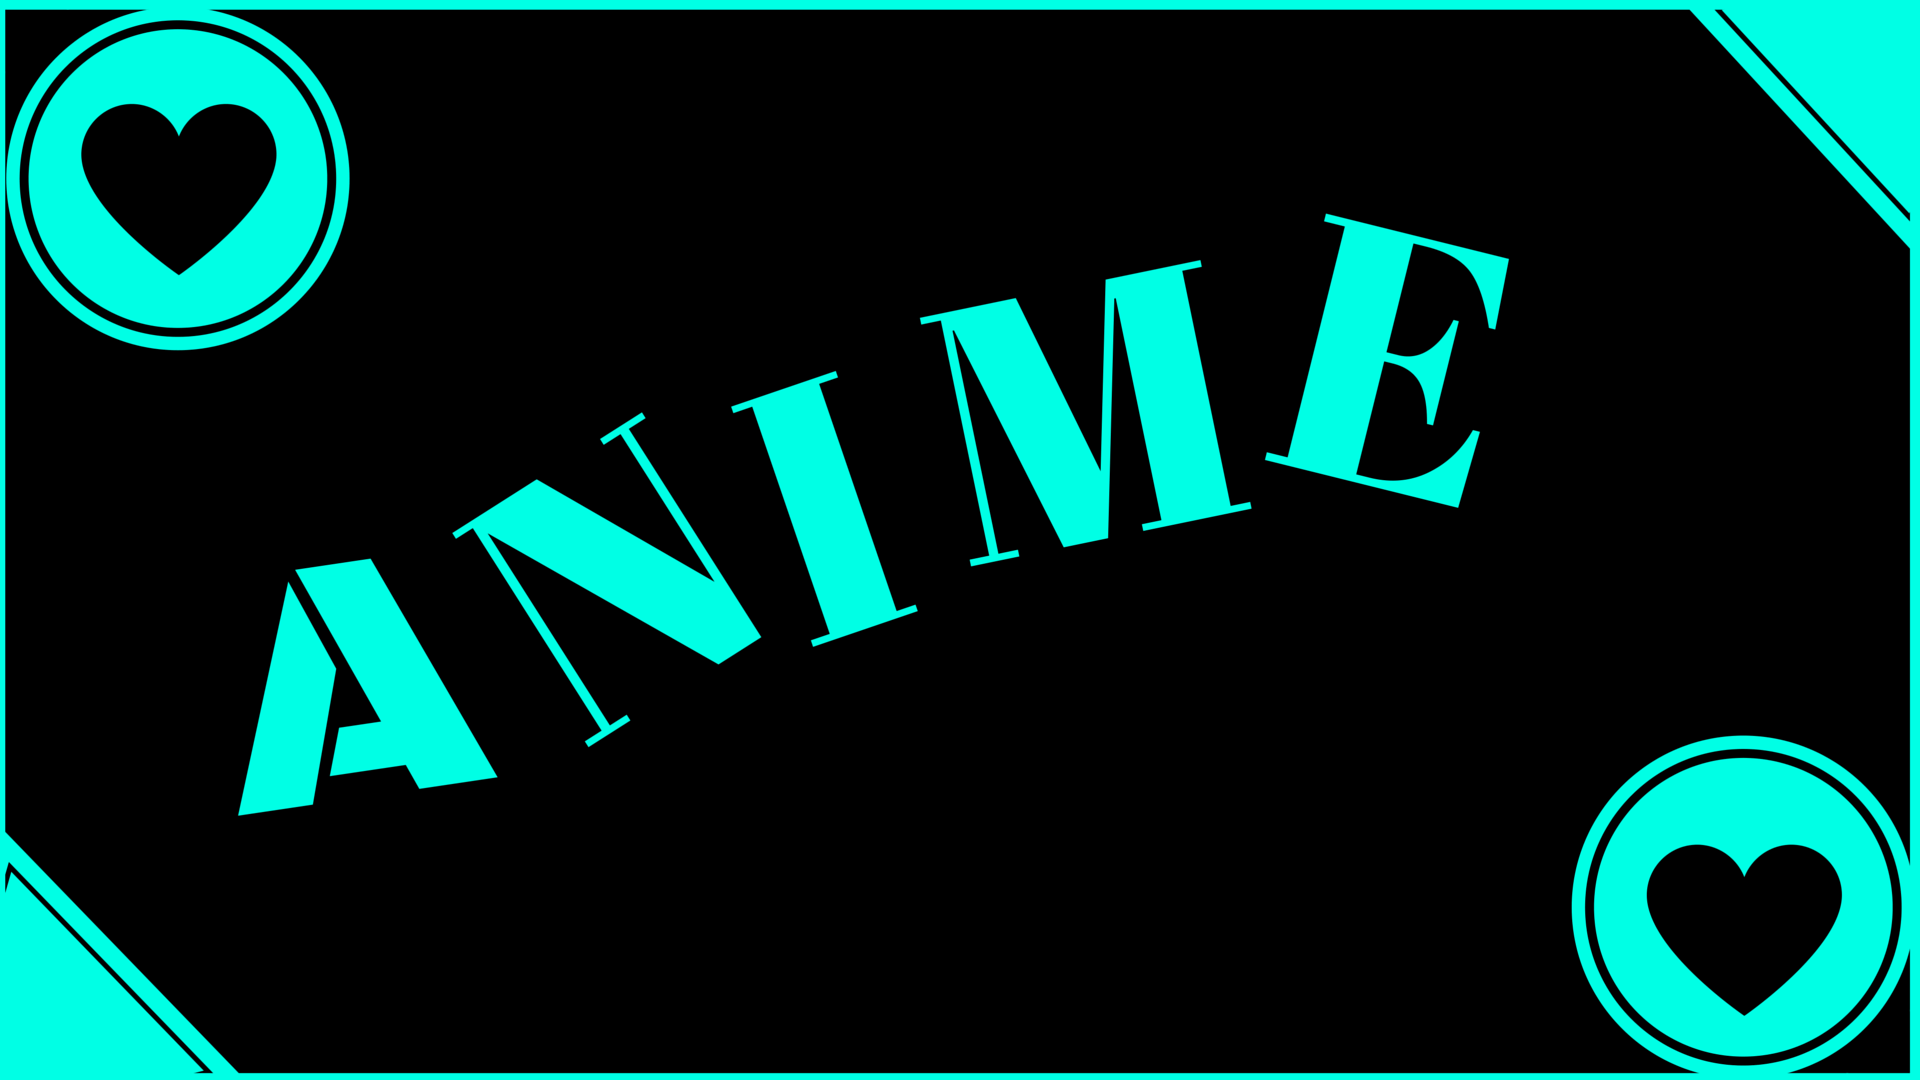 Anime Logo Logodix